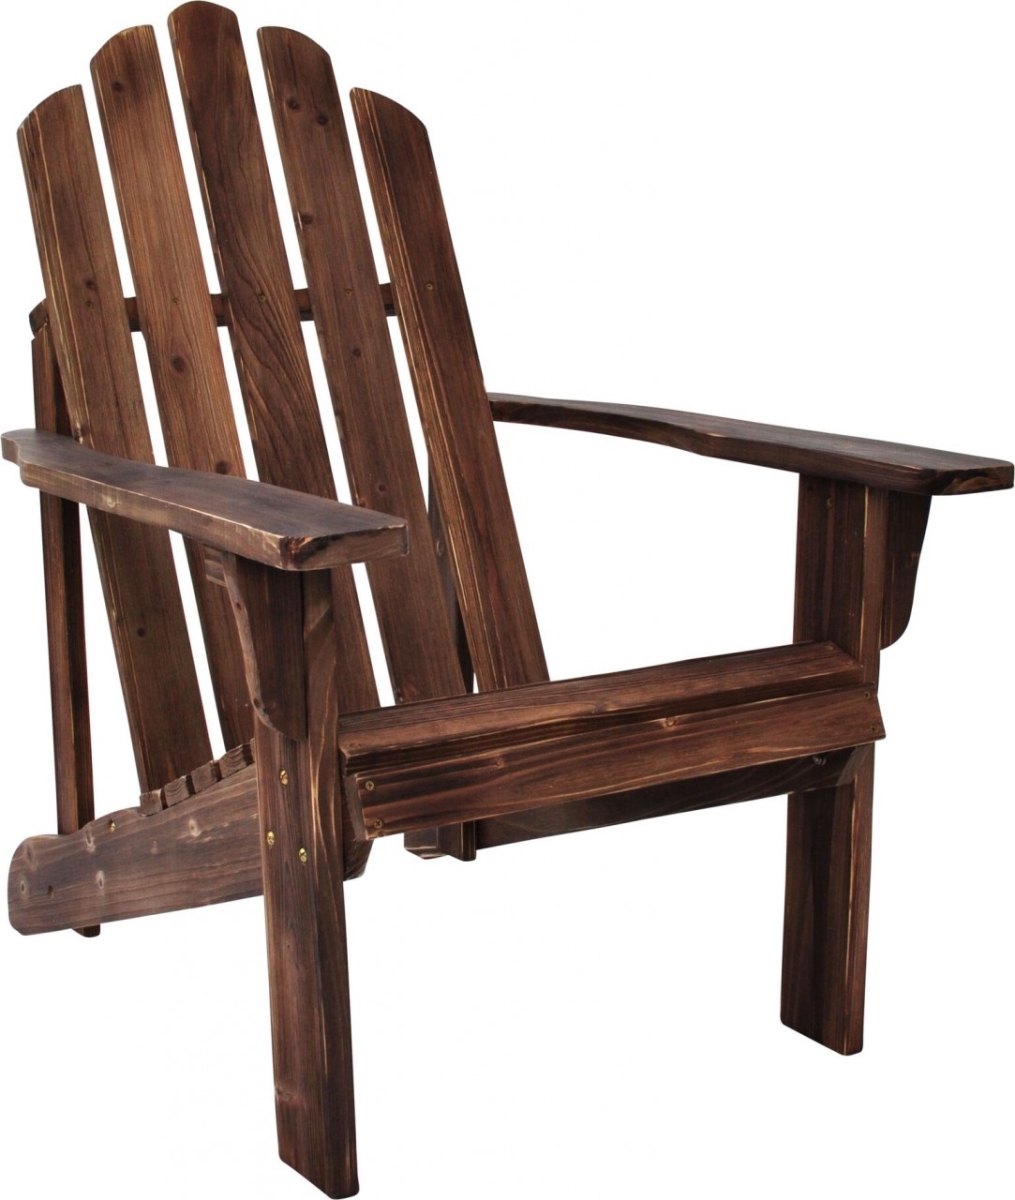 Shineco 5618rw Rustic Adirondack Chair, Dutch Blue